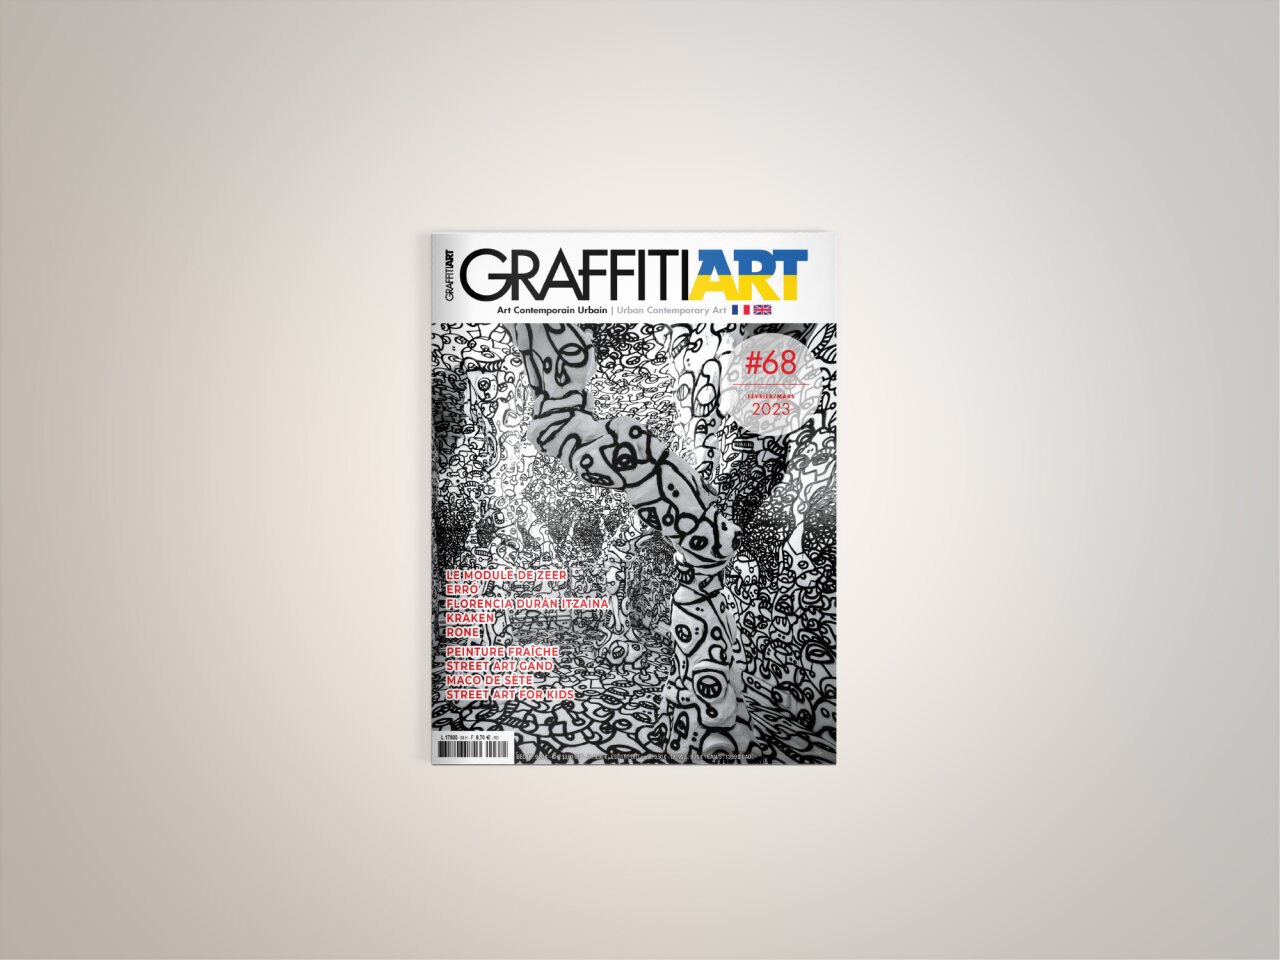 sato-creative-studio-art-japan-paris-g-shock-casio-magazine-graffiti-art-illustration-pixel-excalibur-watches-montre.